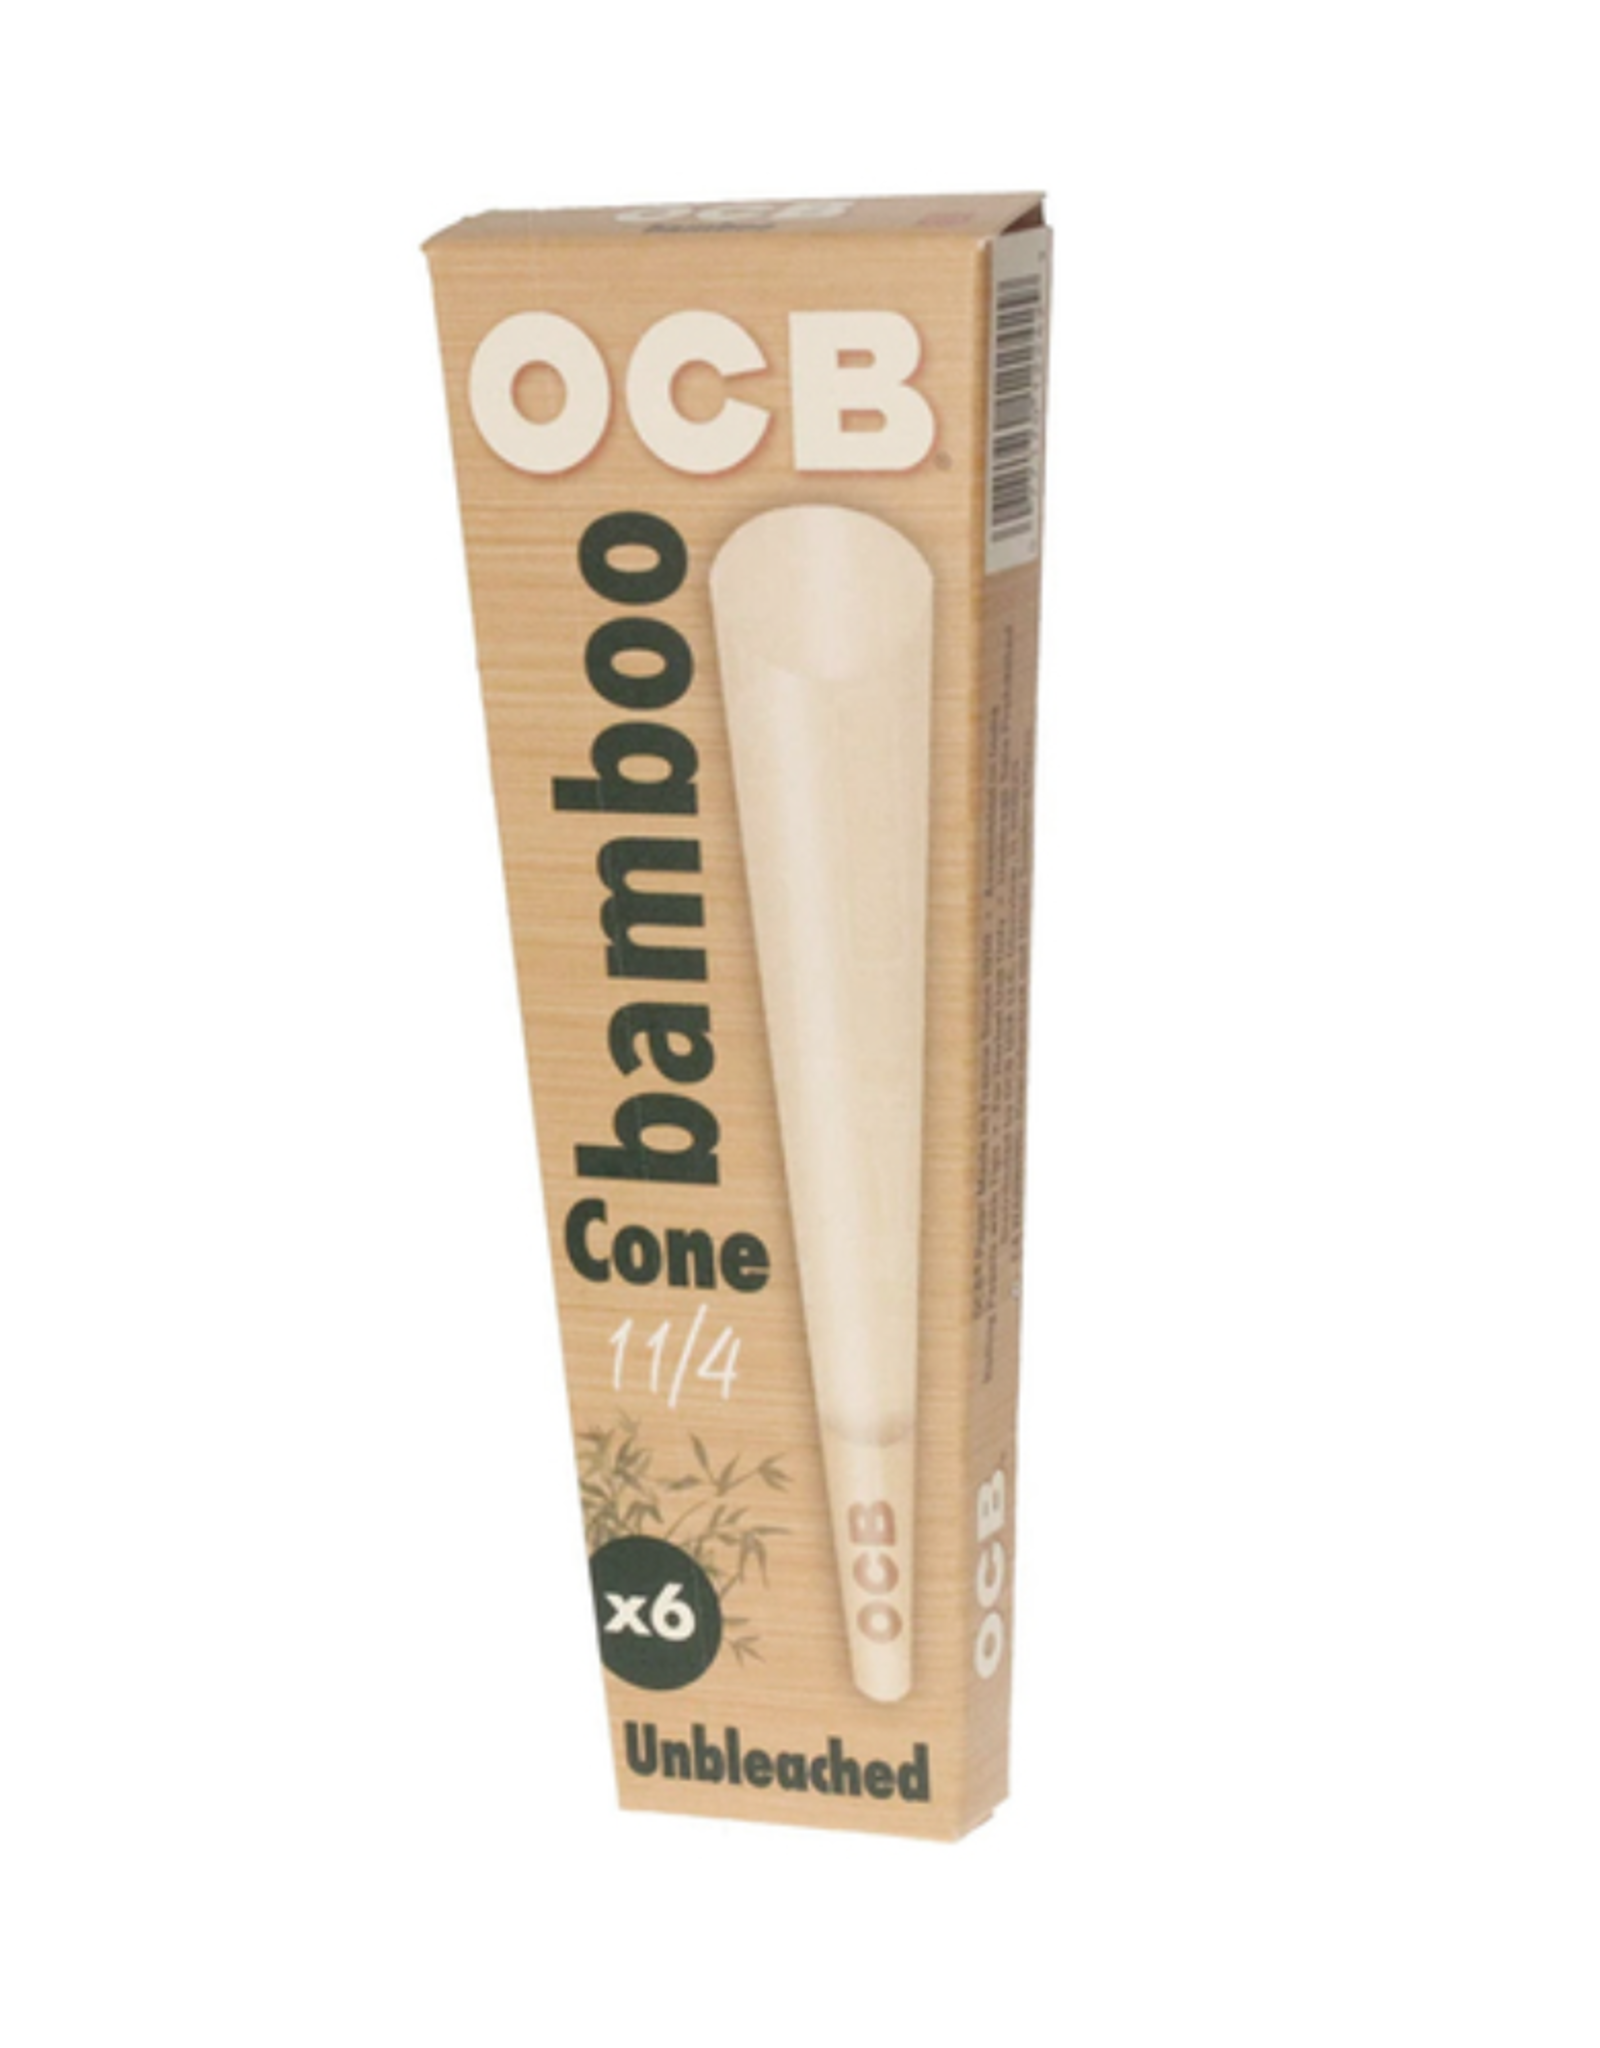 OCB OCB Bamboo Prerolled Cone 1.25 - 6 Cones per pack